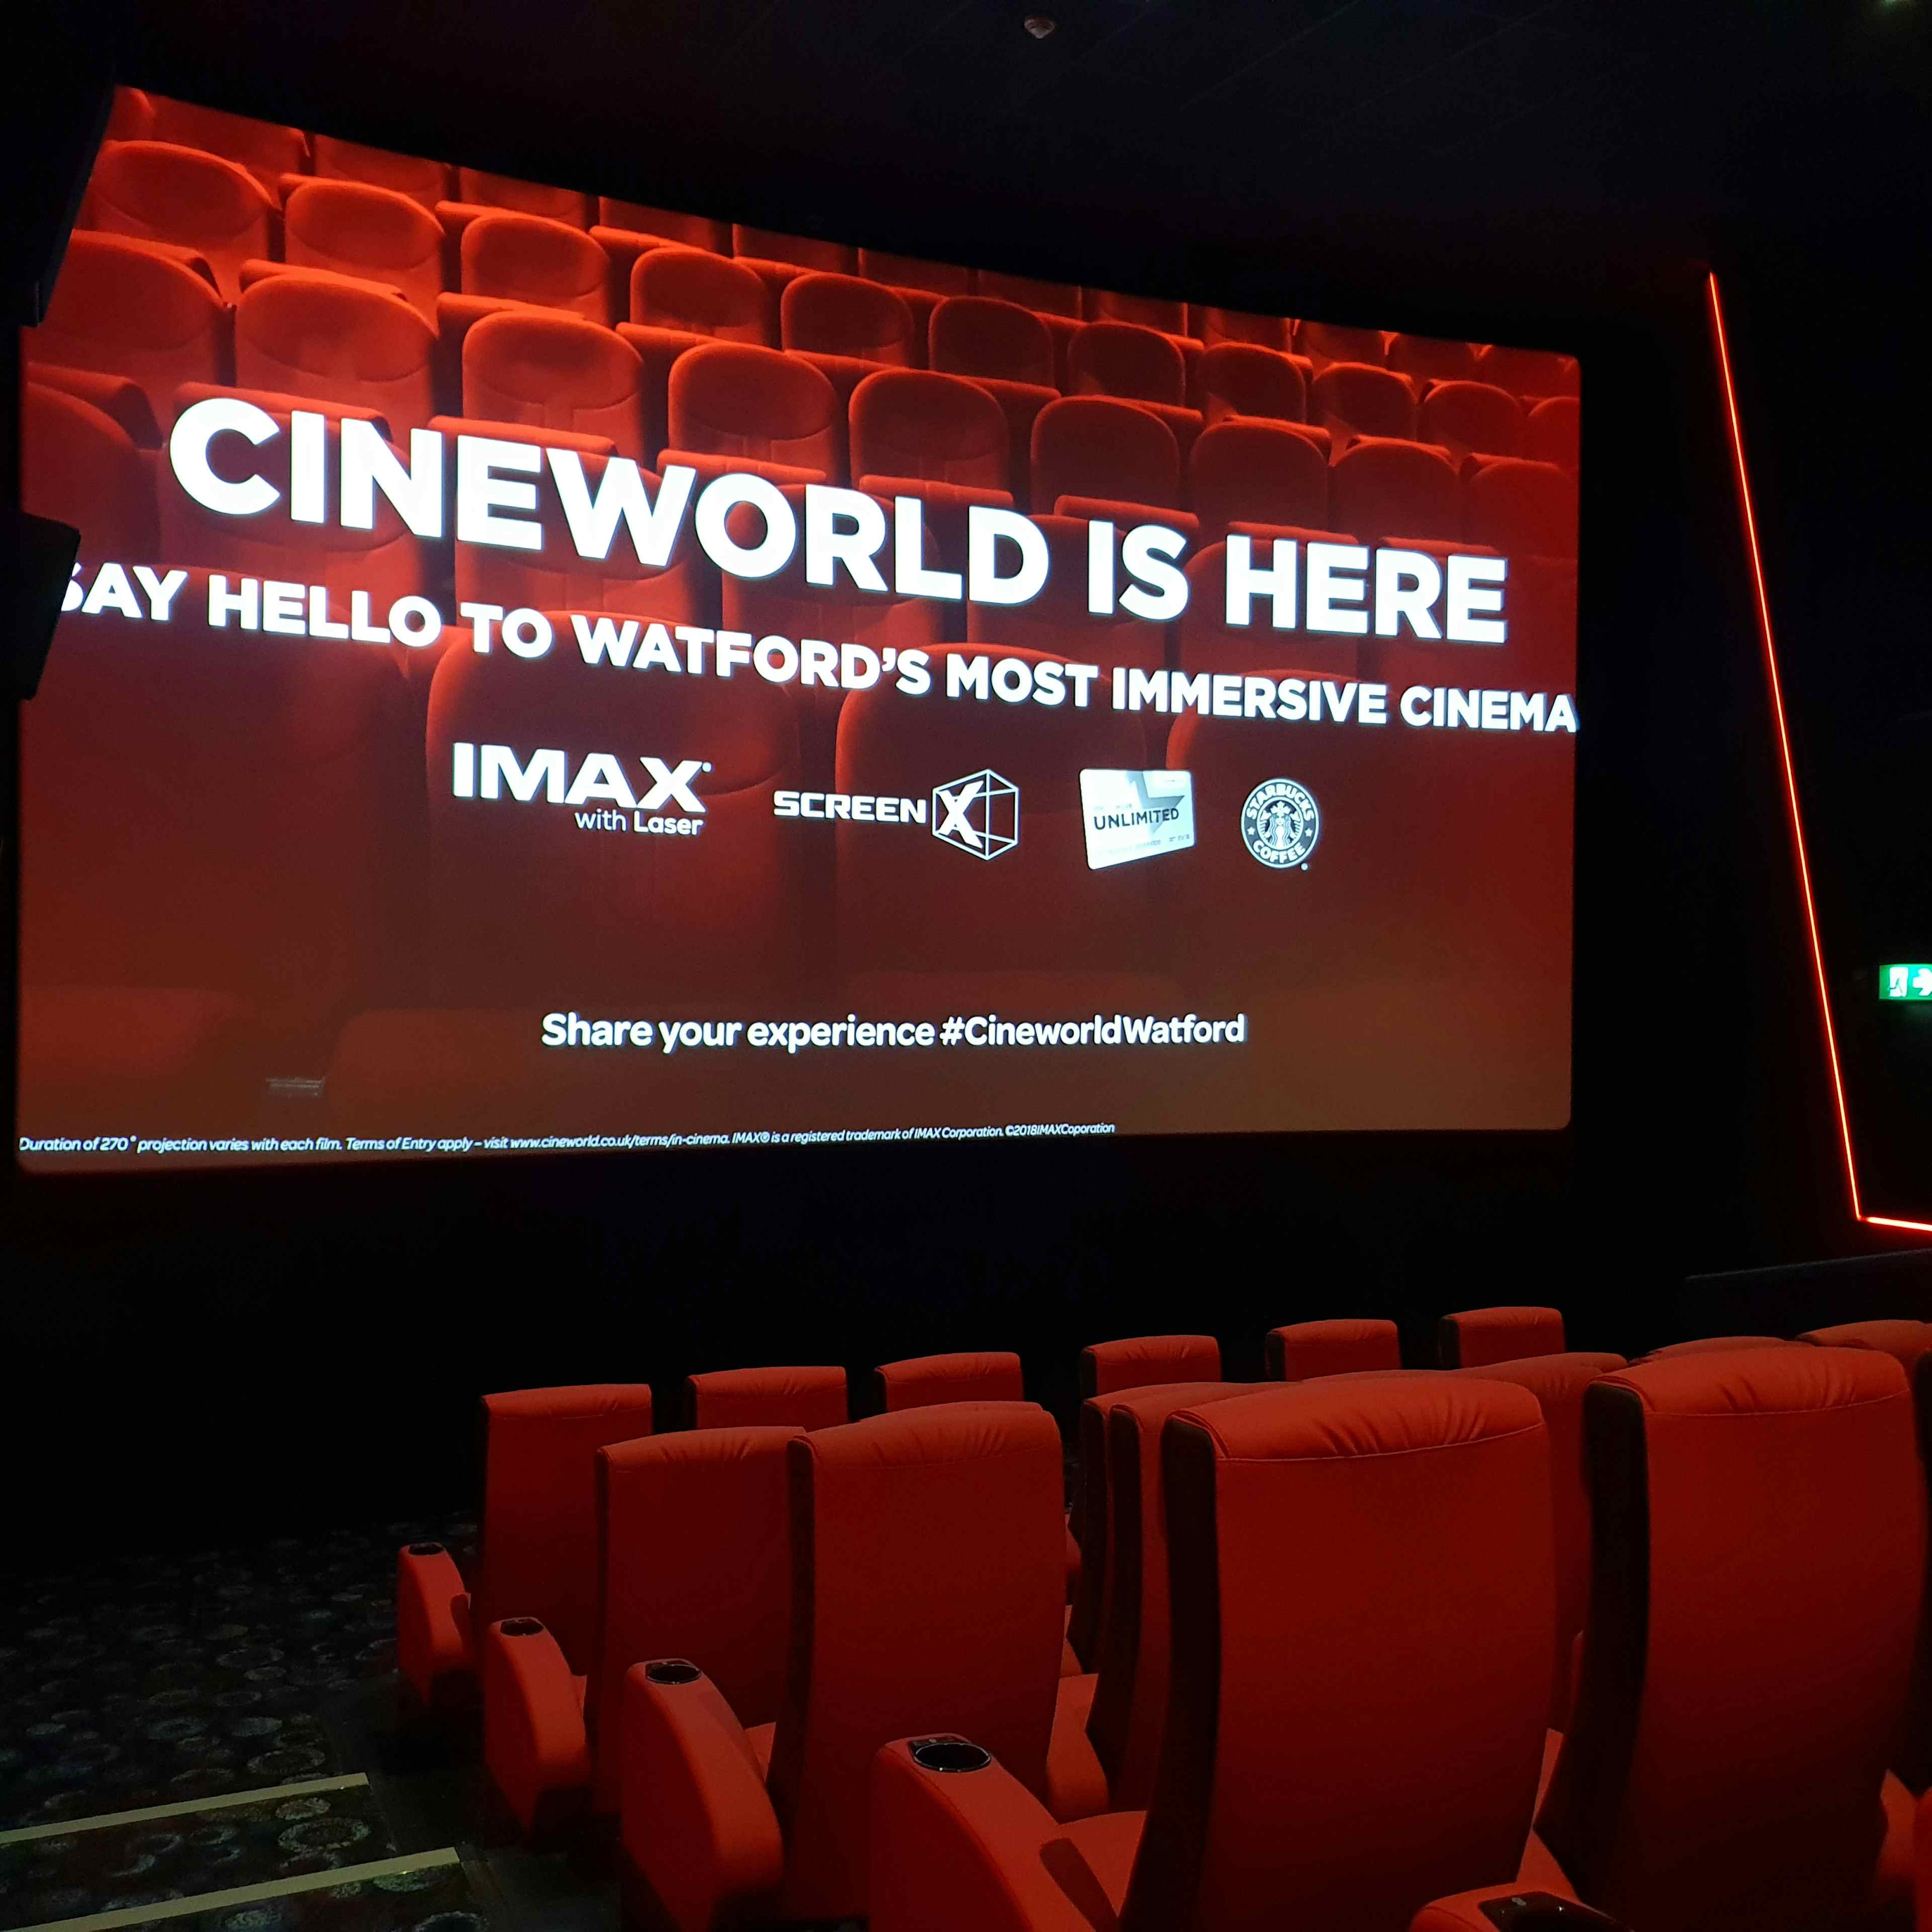 Cineworld Watford - Screen 7 image 1